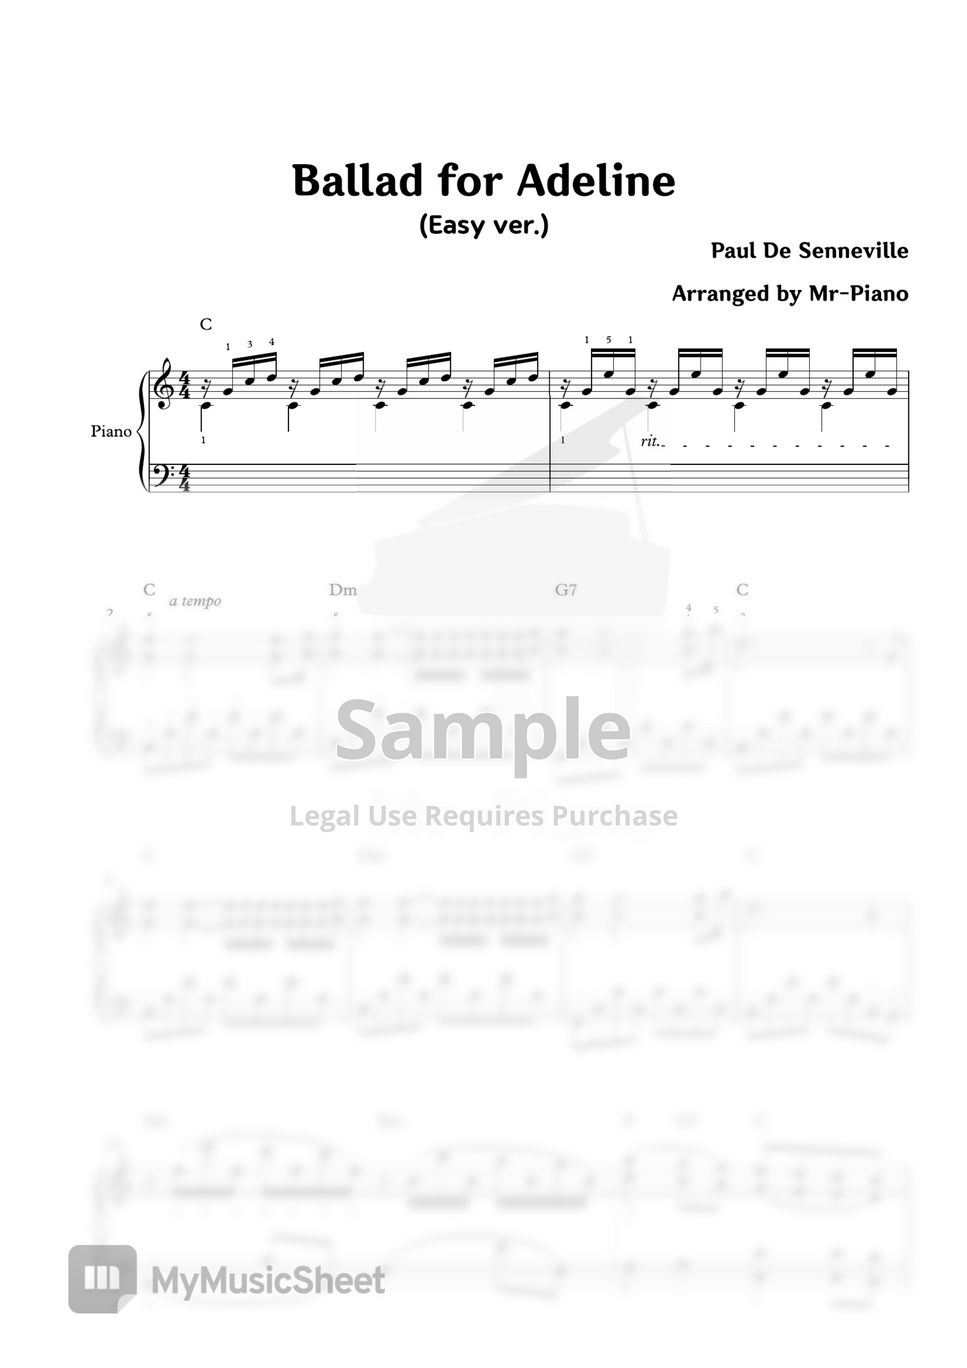 Richard Clayderman - Ballade Pour Adeline (Easy ver.) by Mr-Piano